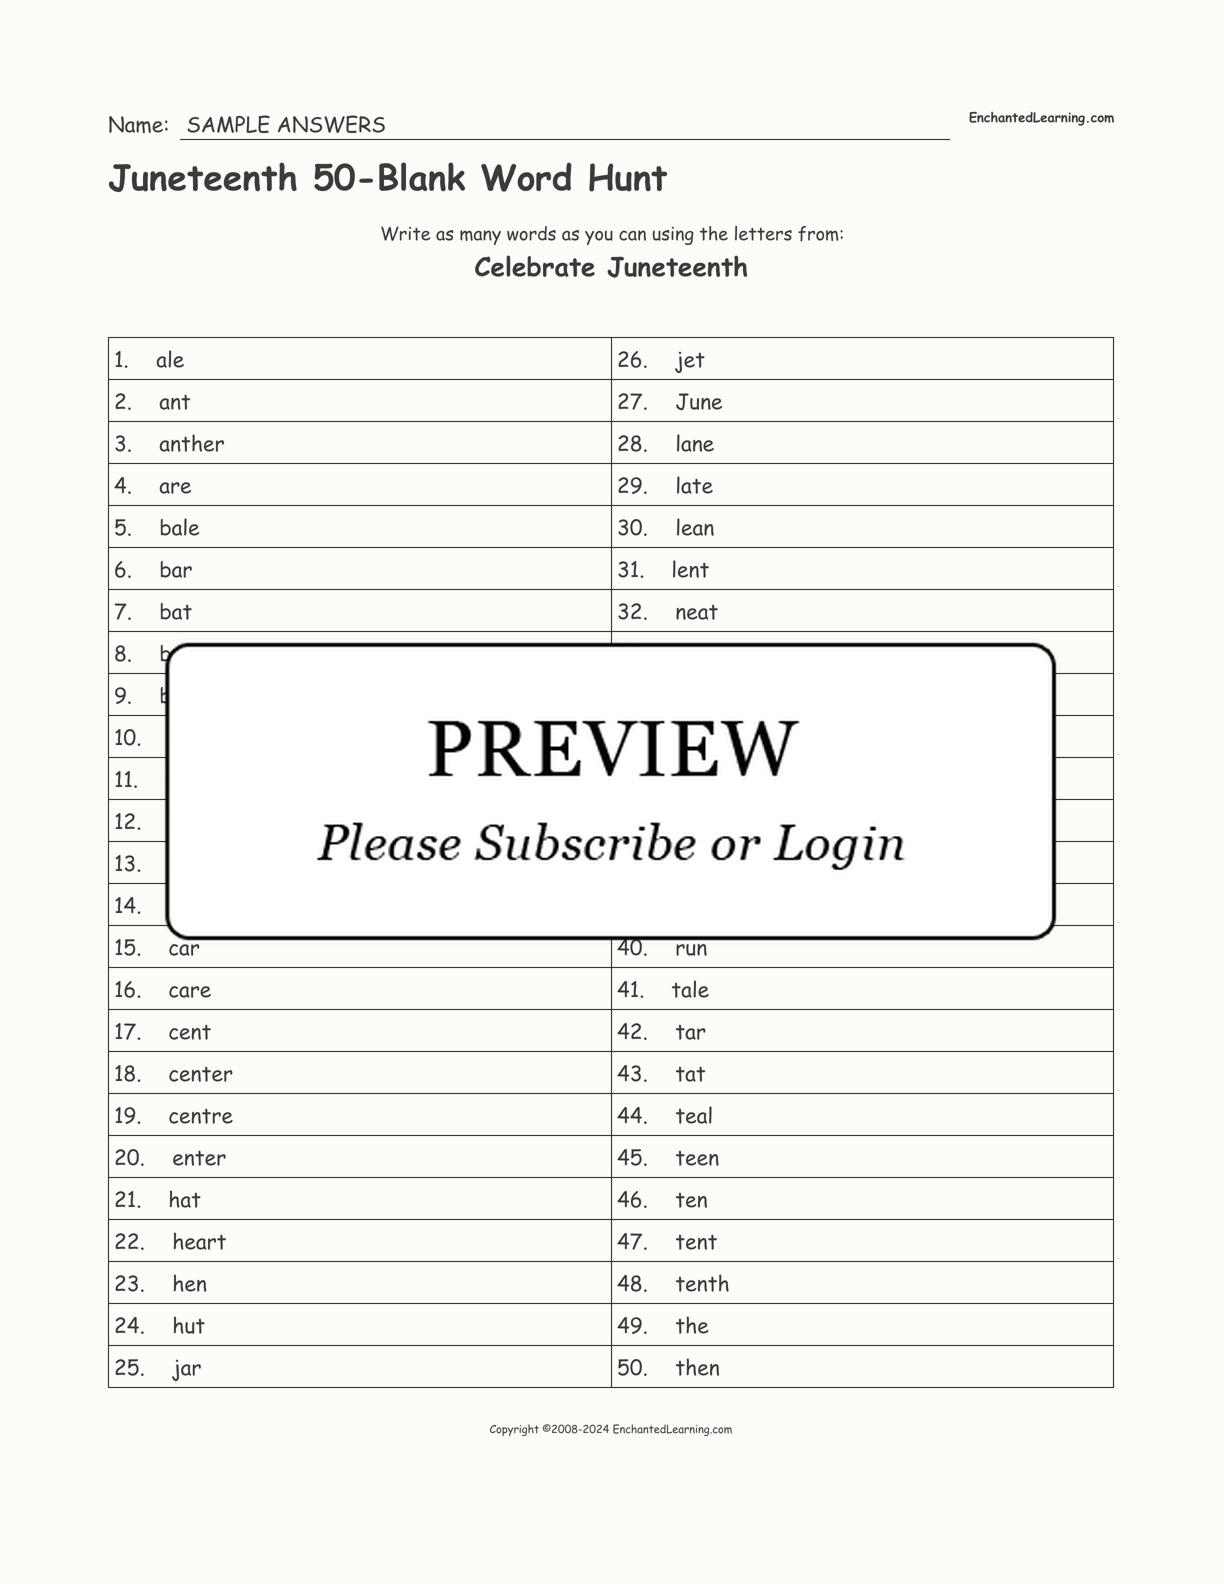 Juneteenth 50-Blank Word Hunt interactive worksheet page 2